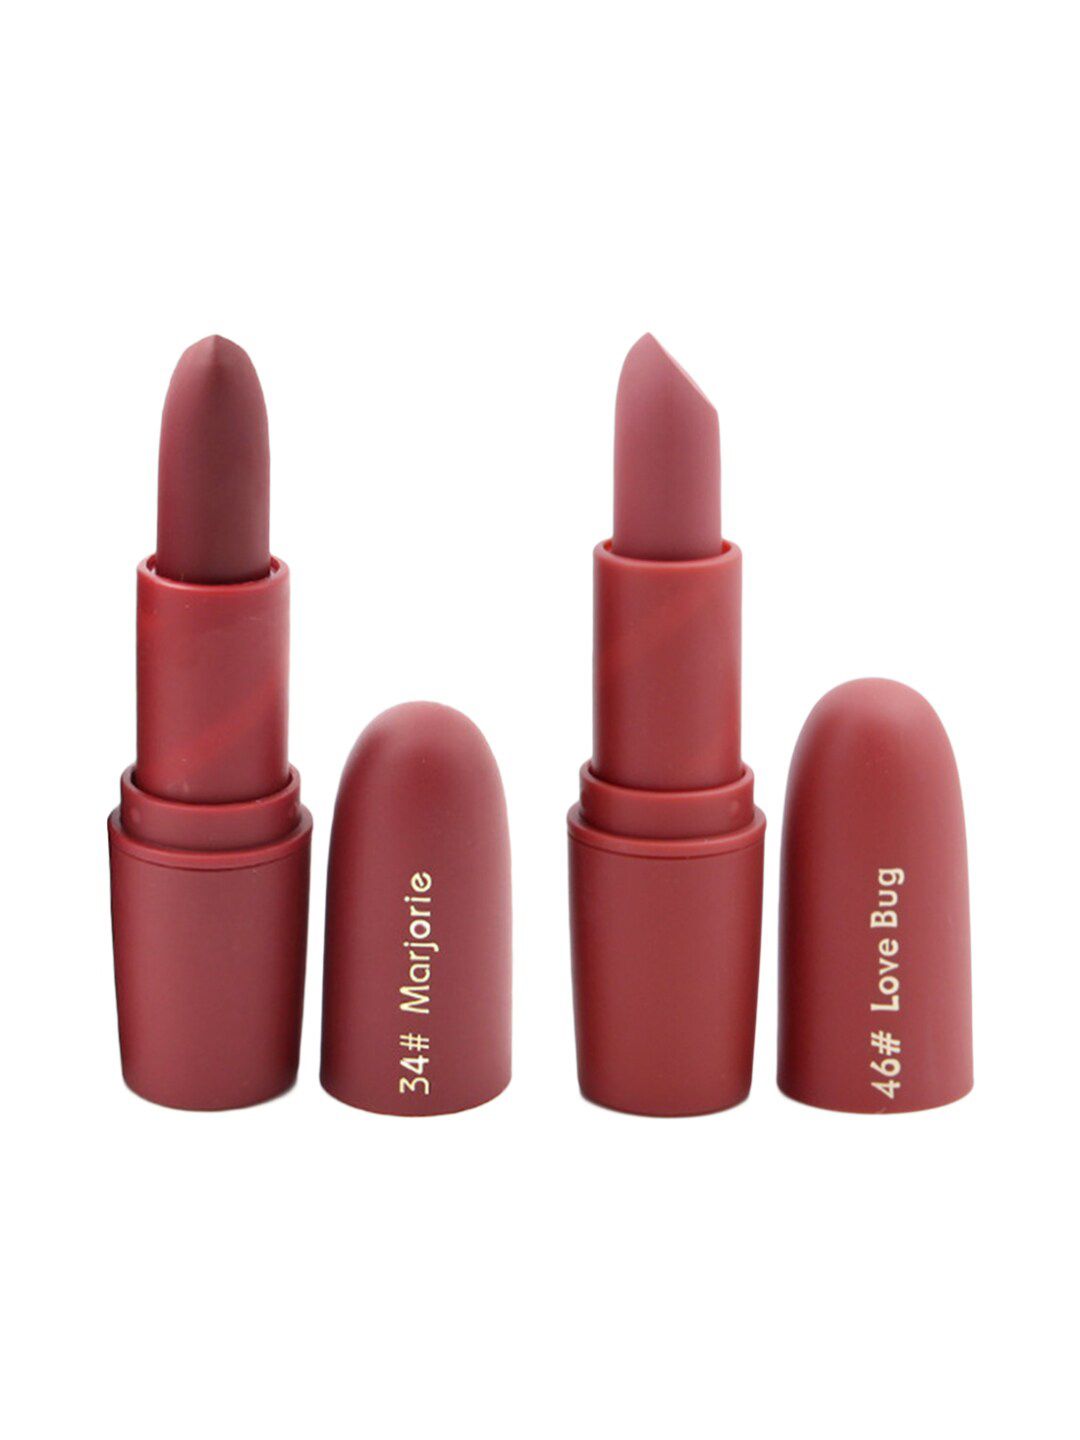 MISS ROSE Professional Make-Up Set of 2 Matte Creamy Lipsticks - Marjorie 34 & Love Bug 46 Price in India